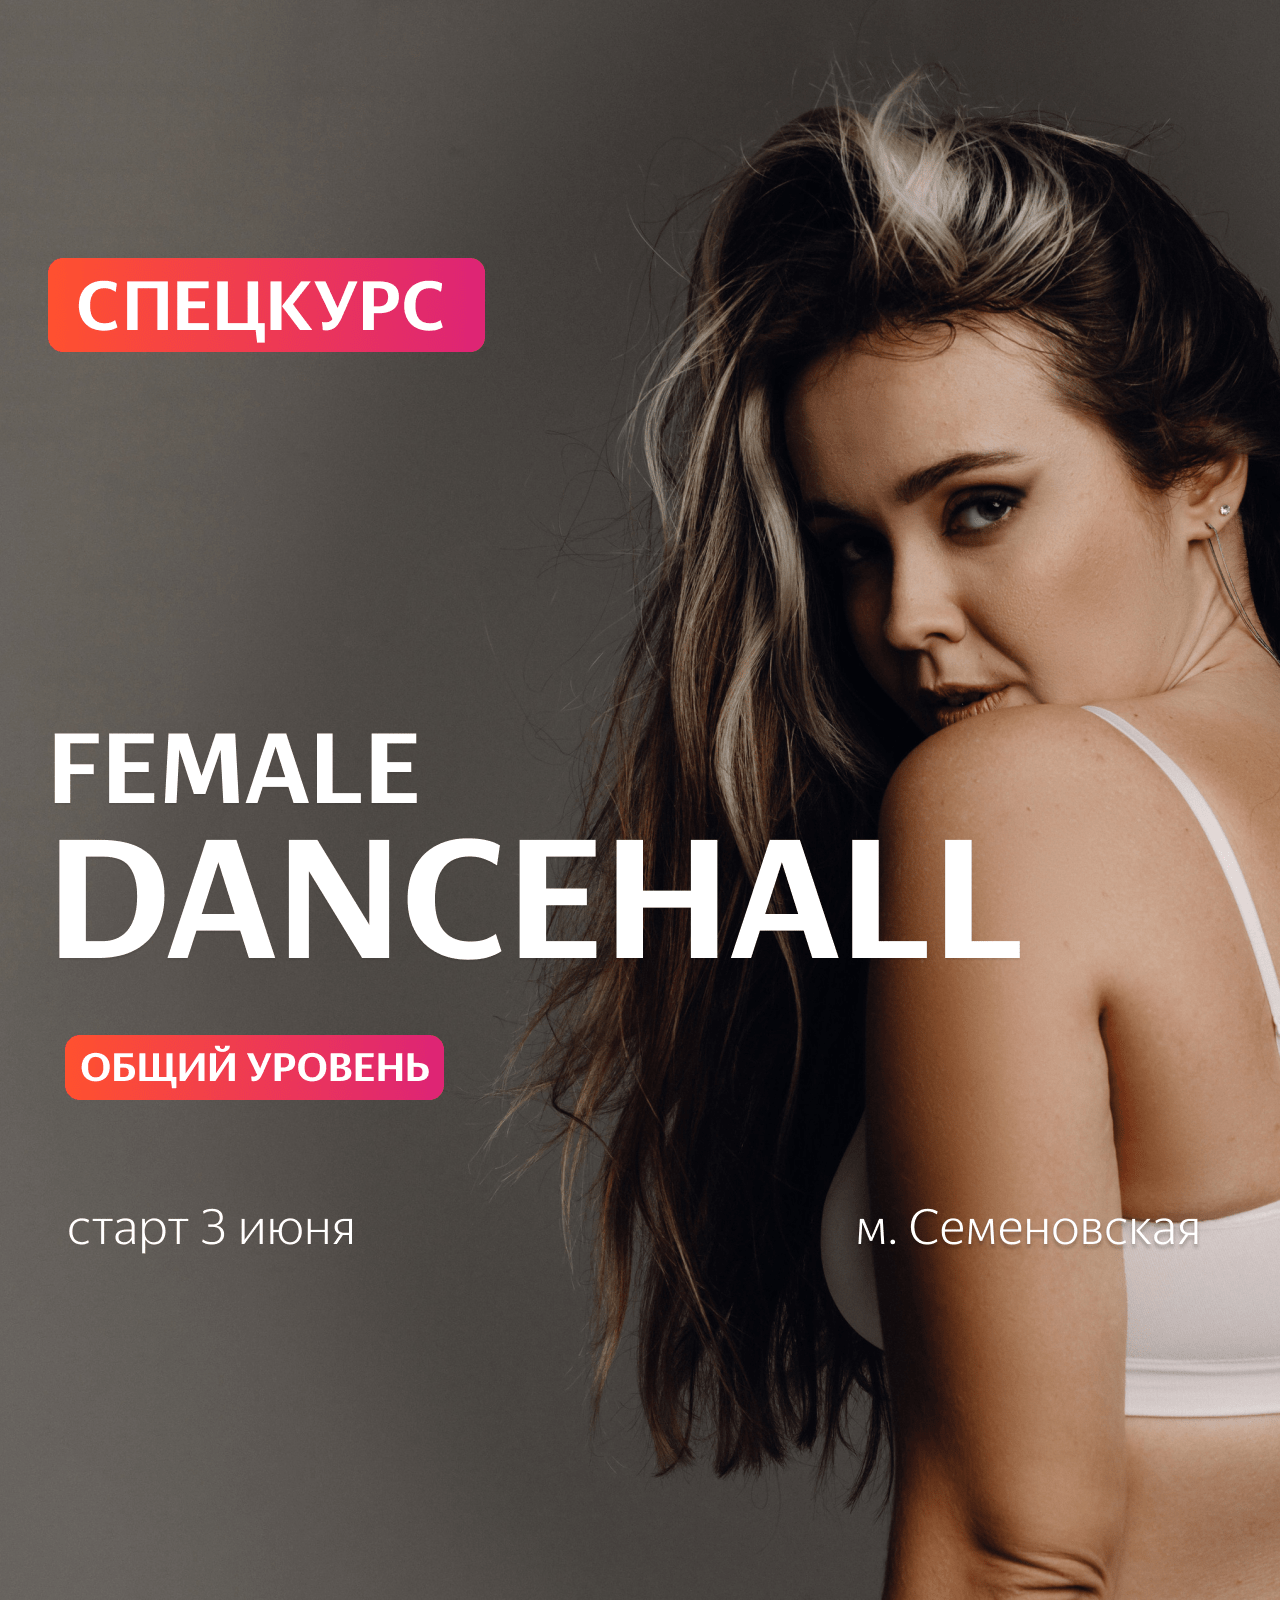 3 ИЮНЯ / СПЕЦКУРС DANCEHALL FEMALE